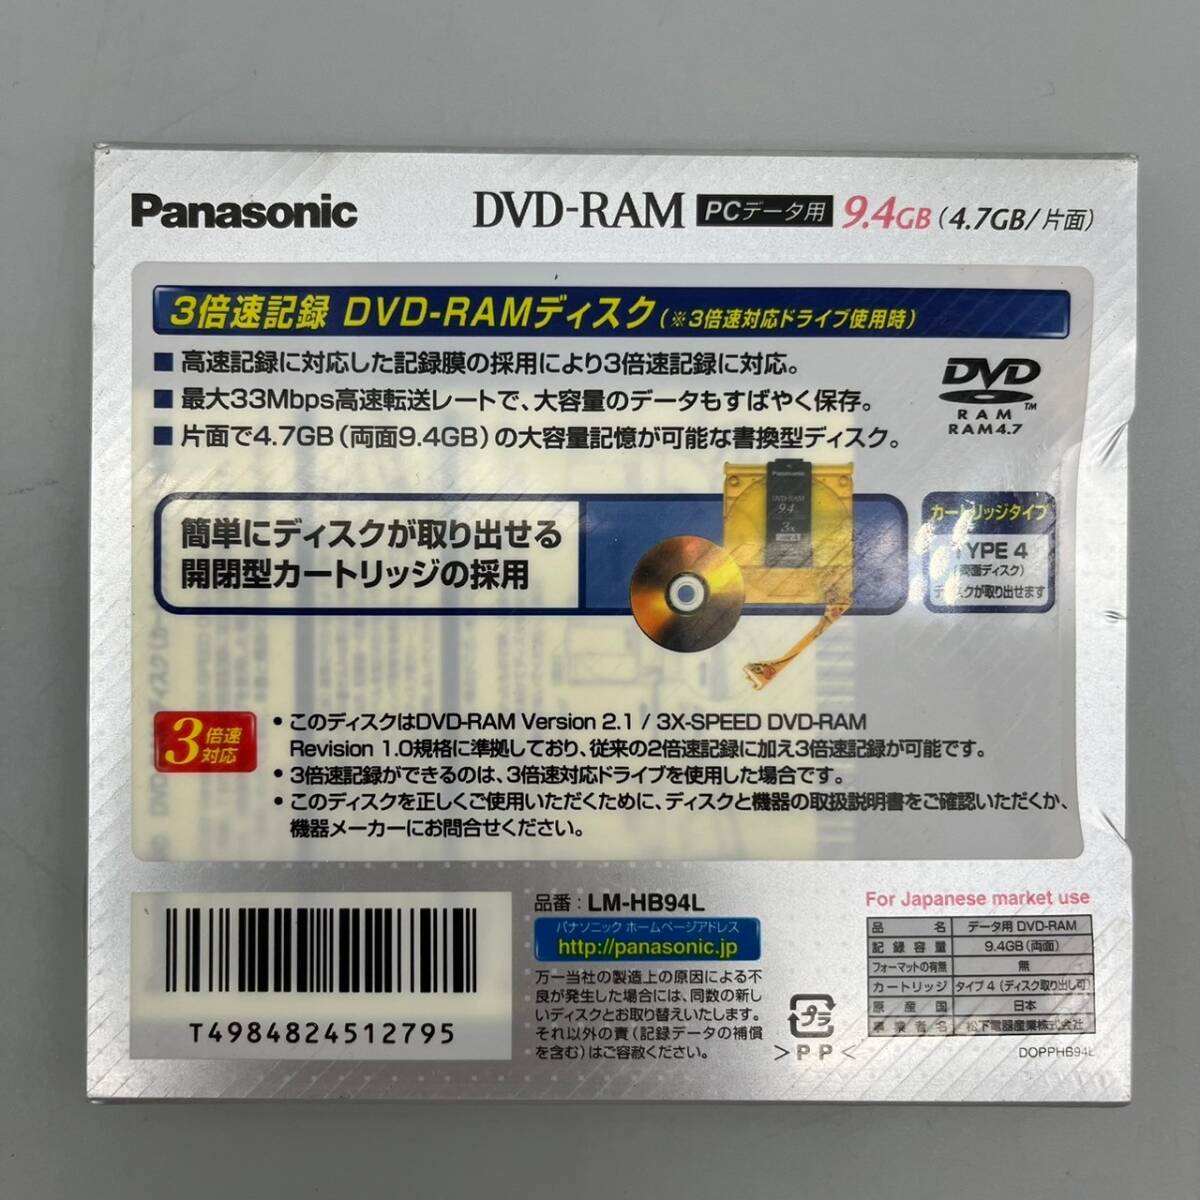 Panasonic Panasonic DVD-RAM LM-HB94L PC data for 3 speed correspondence both sides disk 9.4GB tube :050503